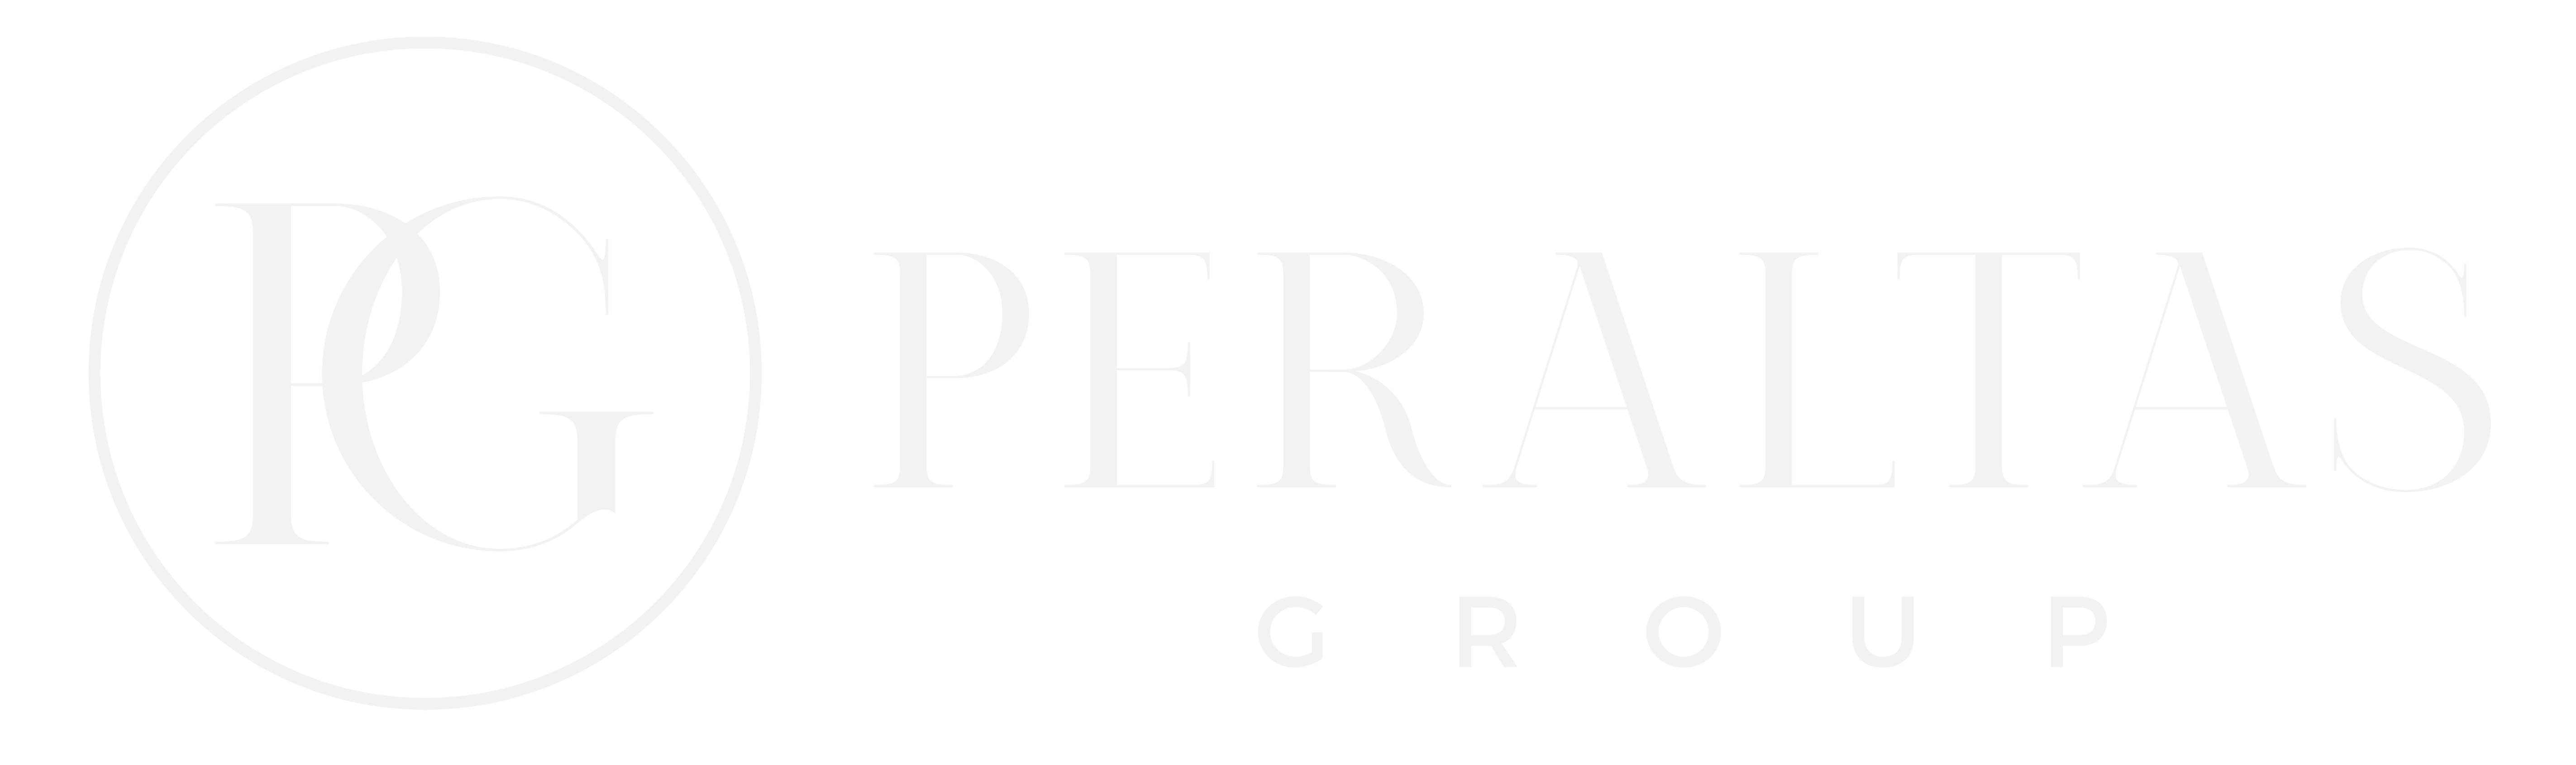 Peraltas Group